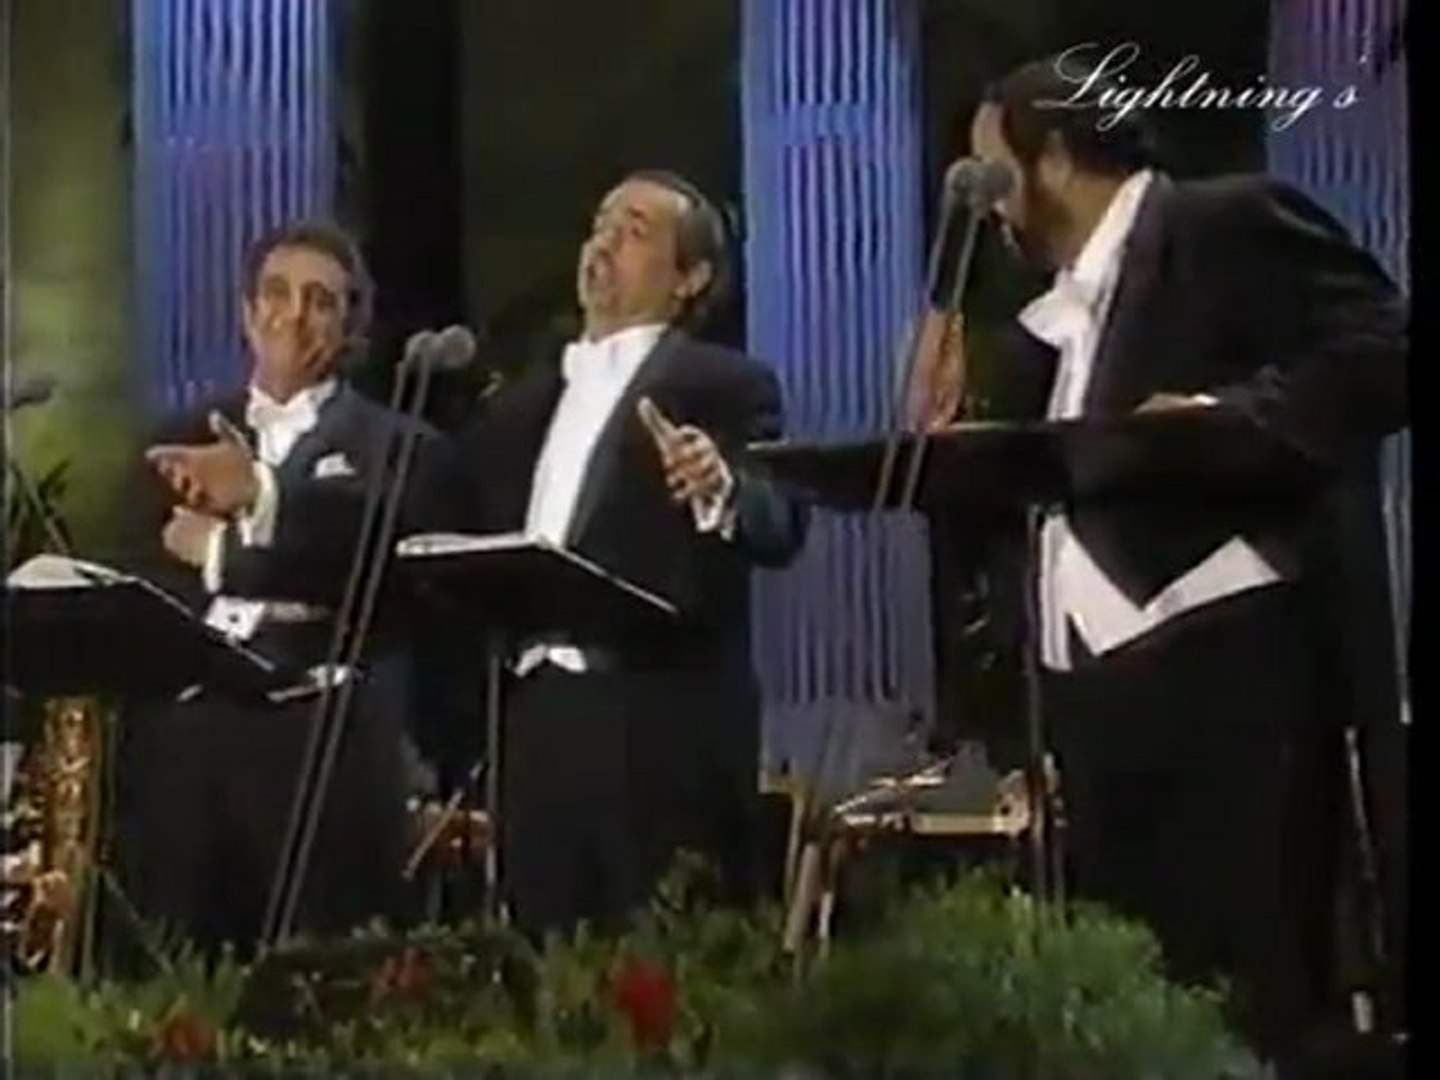 Пою 3 видео. 3 Тенора Паваротти Доминго Каррерас. The three Tenors in Concert, 1994 три тенора. 3 Тенора Паваротти Доминго Каррерас на концерте. Доминго и Хосе Каррерас.